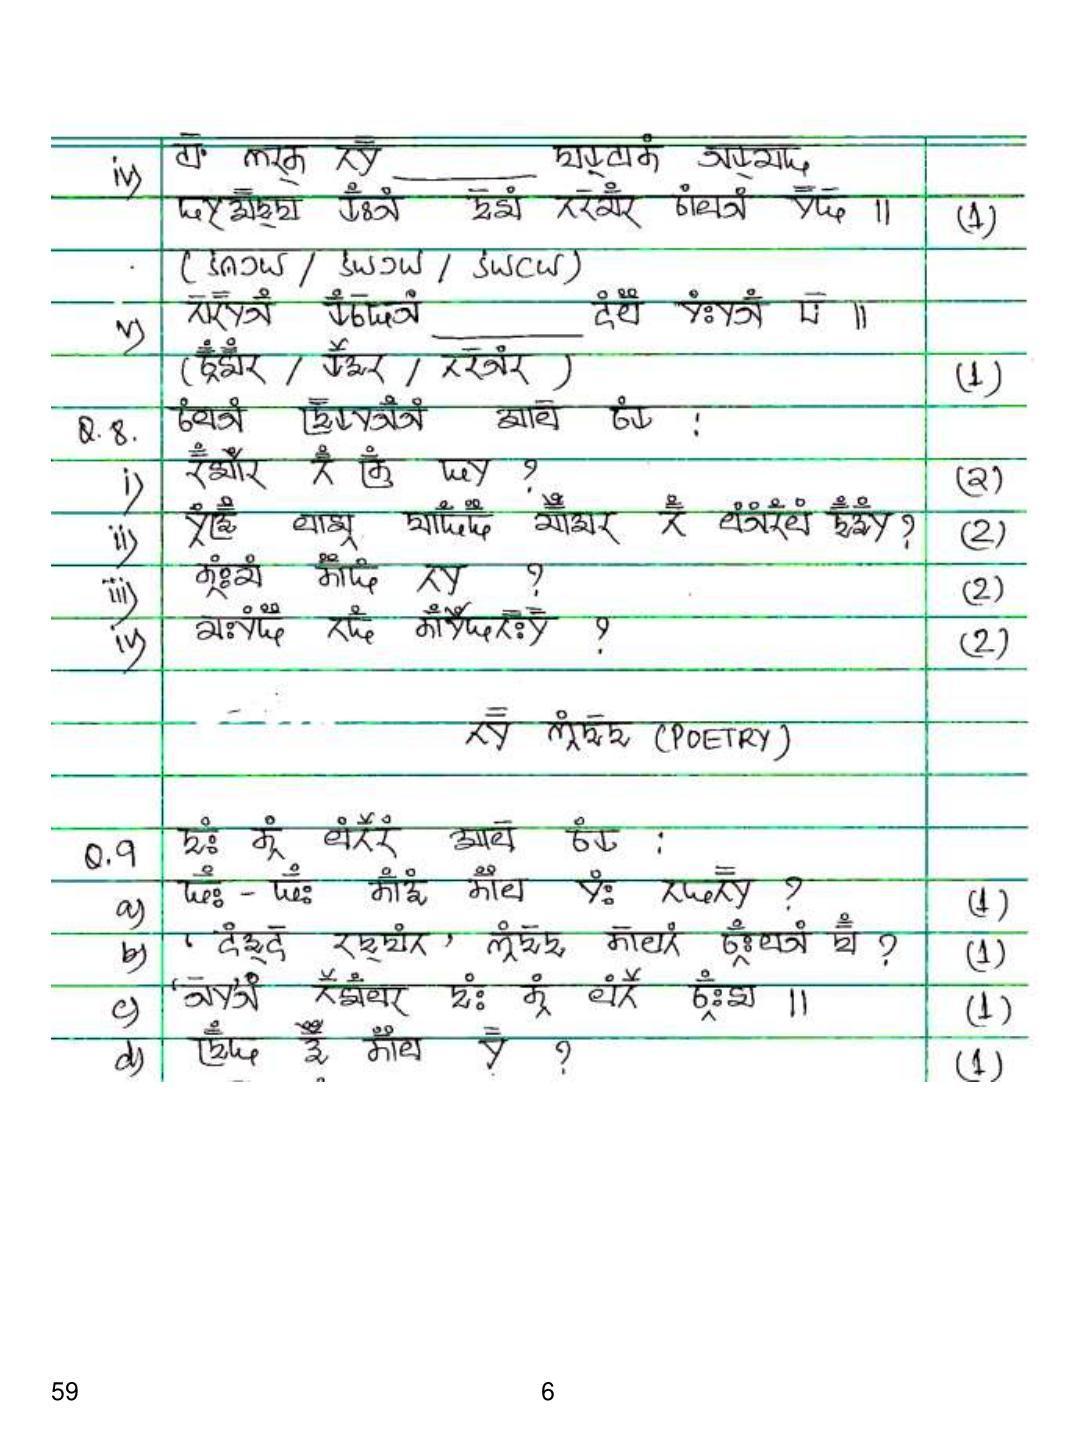 CBSE Class 10 59 Gurung 2019 Question Paper - Page 6